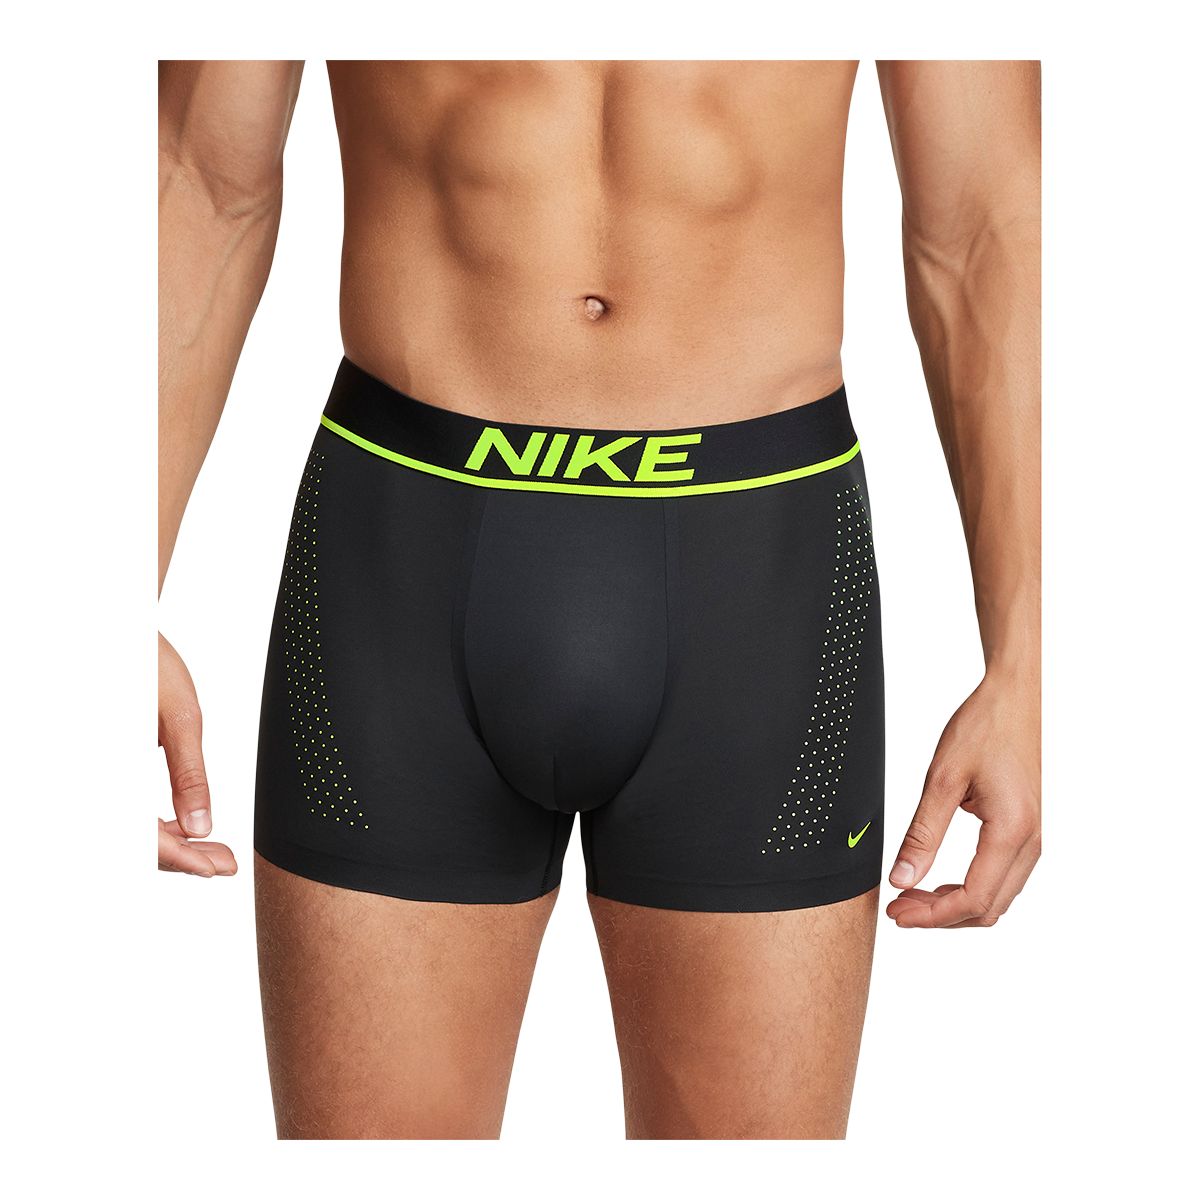 Nike Elite Micro Men's Trunk, Underwear